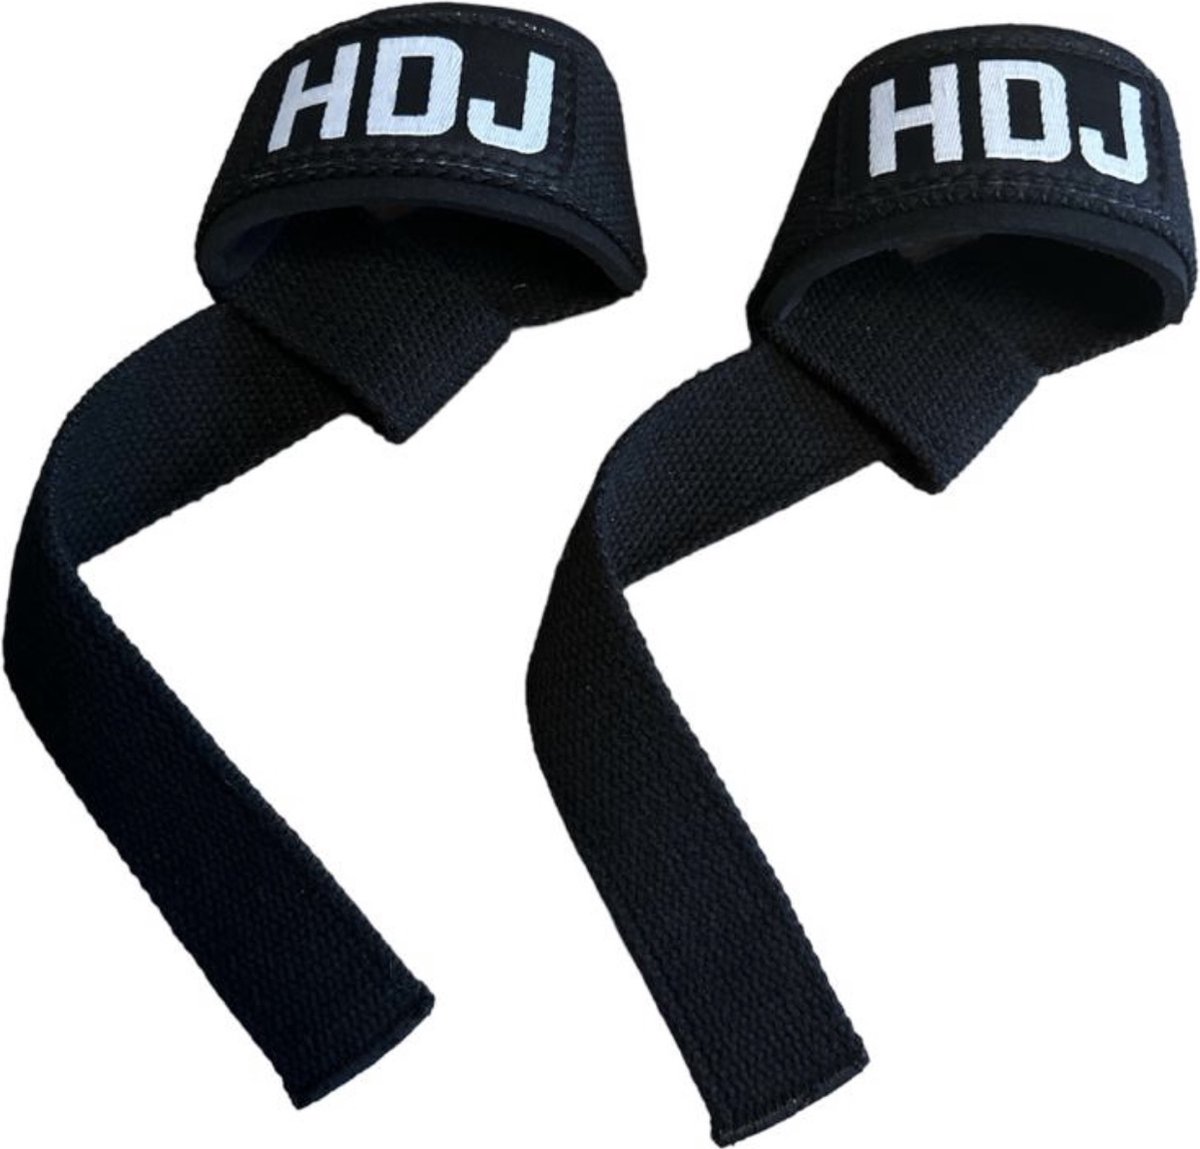 HDJ Lifting Straps Zwart - Krachttraining Accessoires - Powerlifting - Bodybuilding - Fitness - Wrist Wraps - Gym Straps